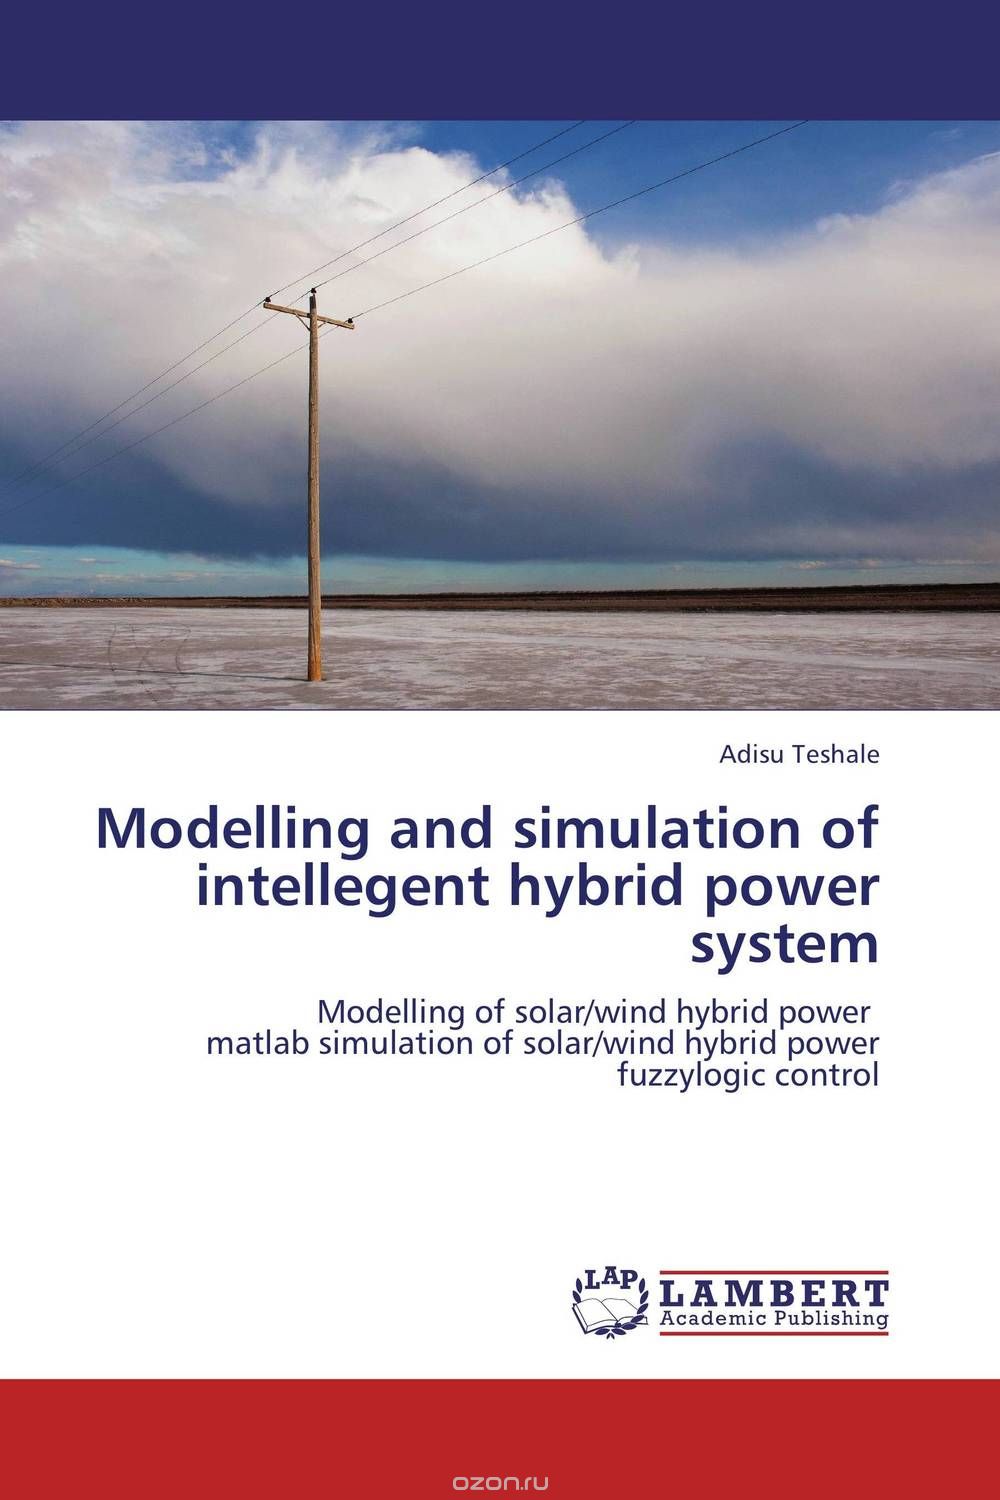 Скачать книгу "Modelling and simulation of intellegent hybrid power system"